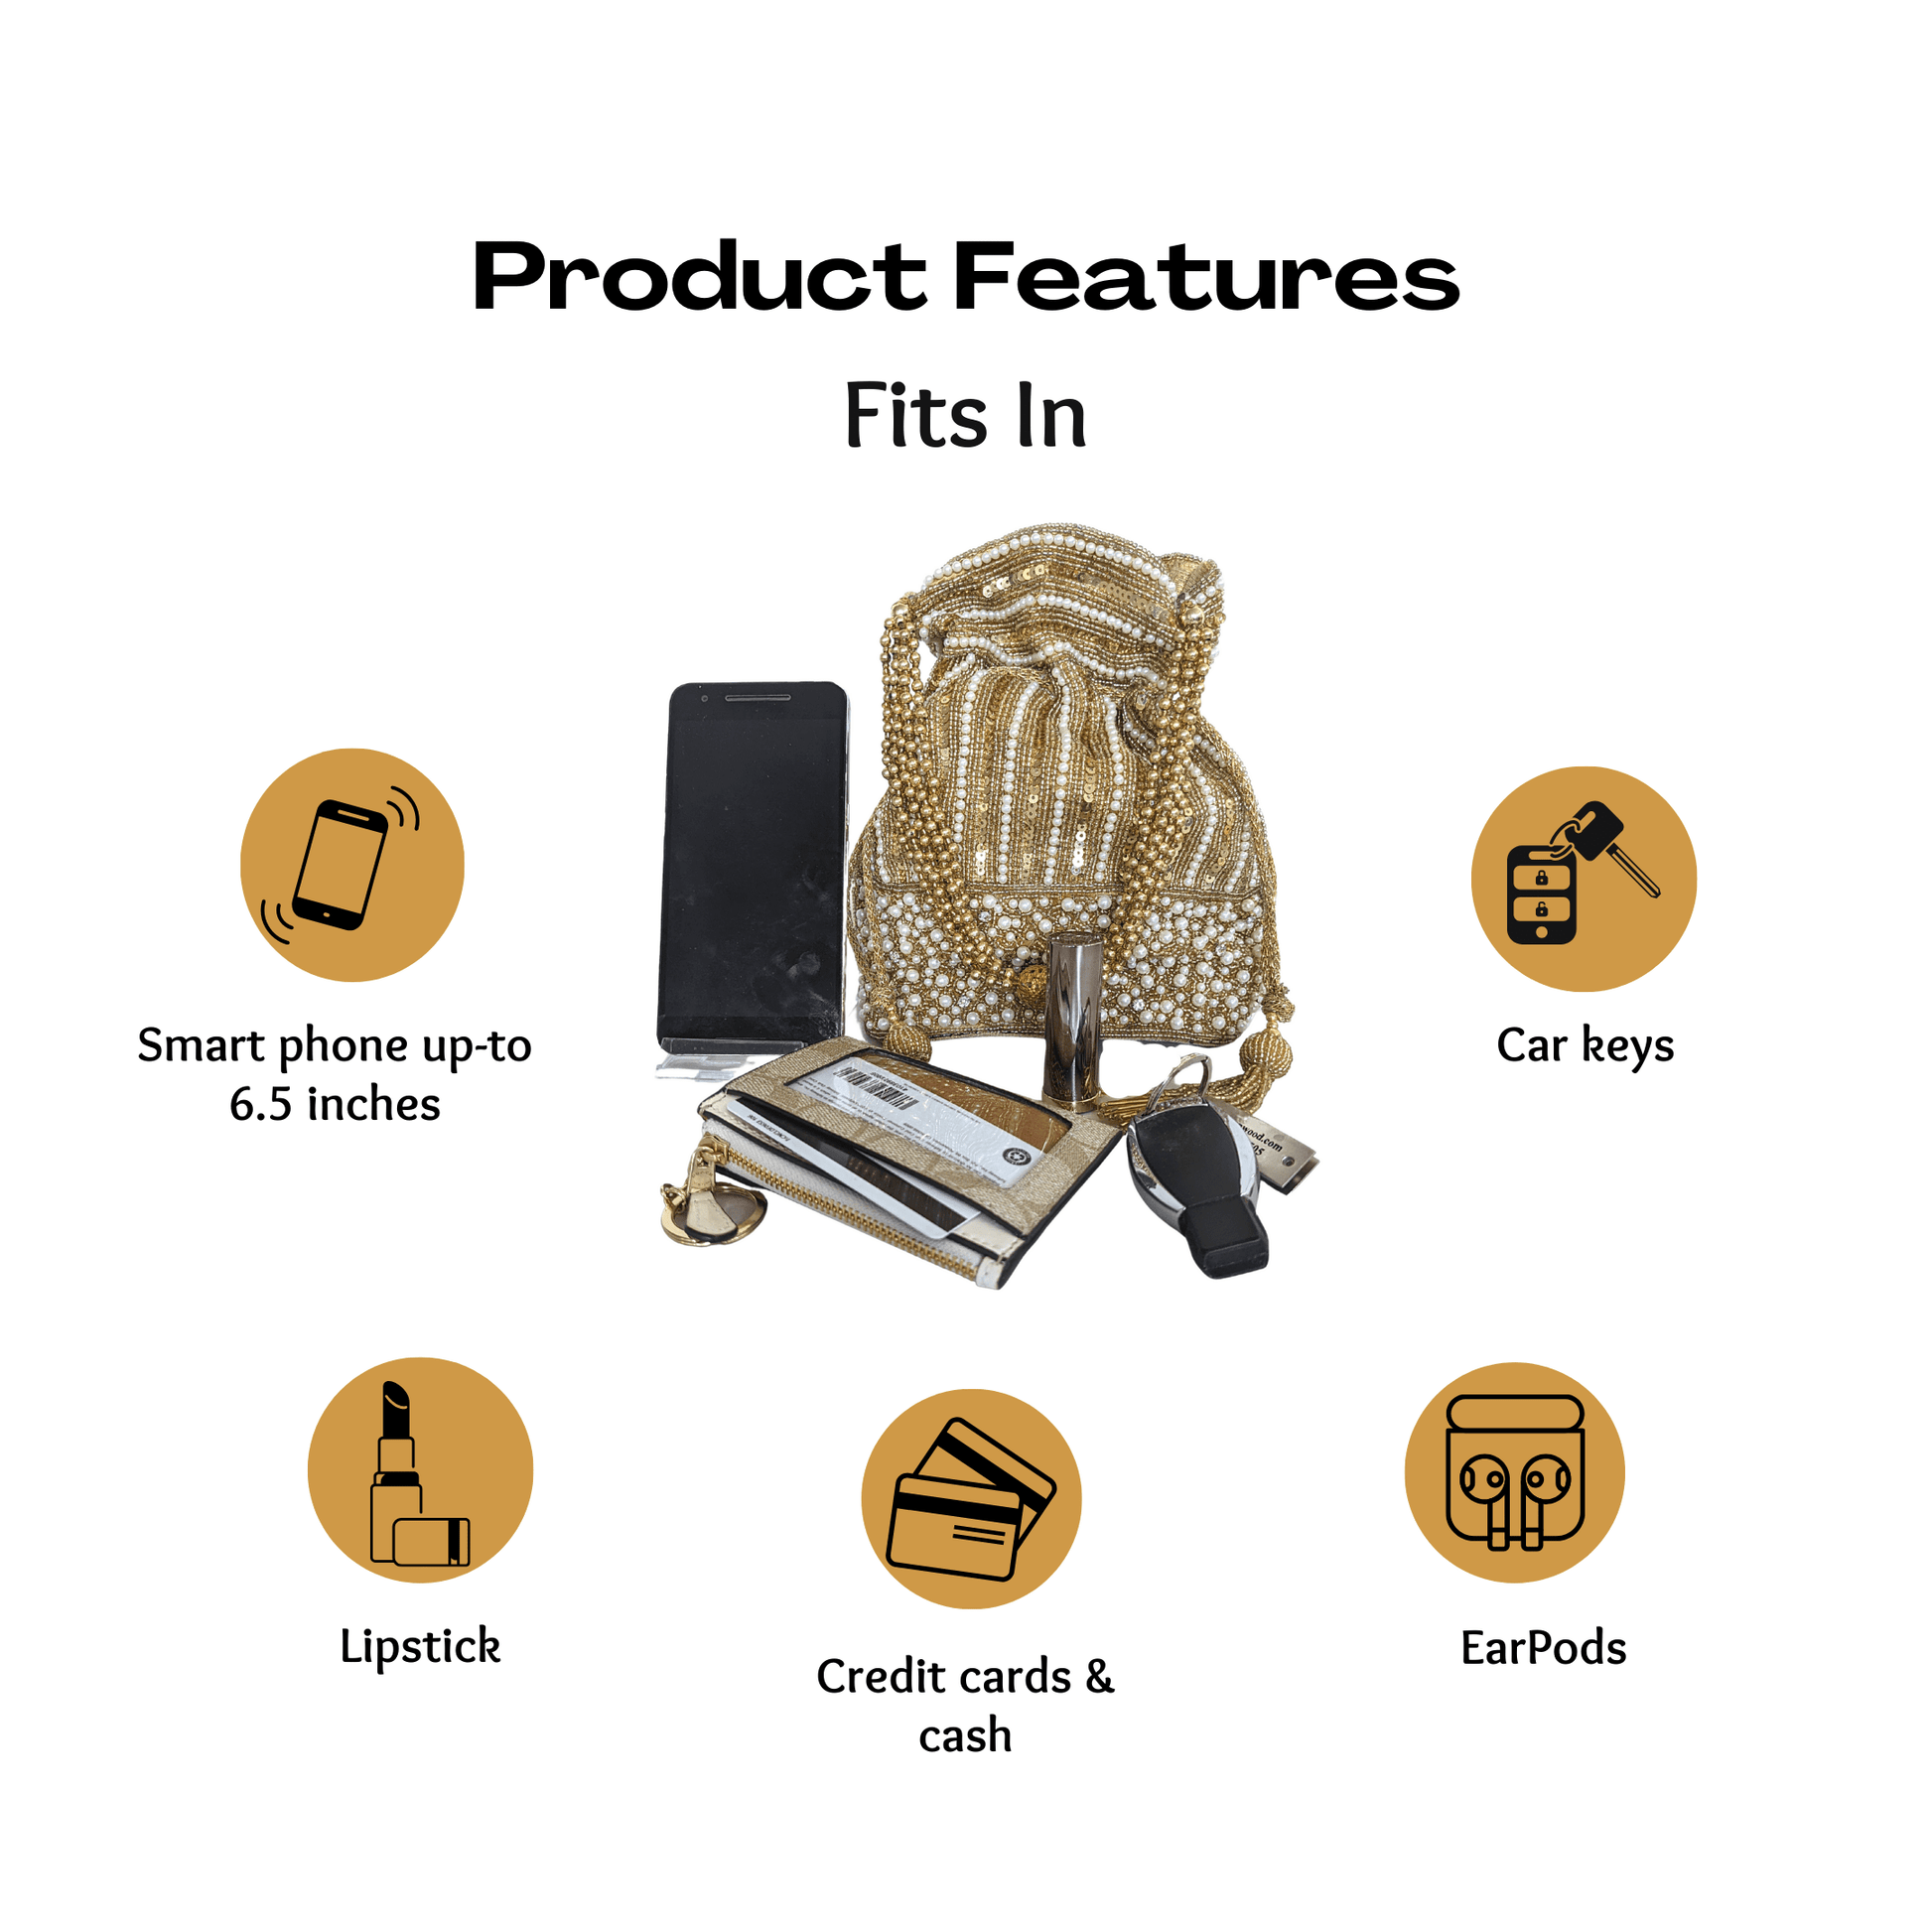 Handmade Bridal Fashion Indian Potli Bag [Gold] - Craft Bazaar